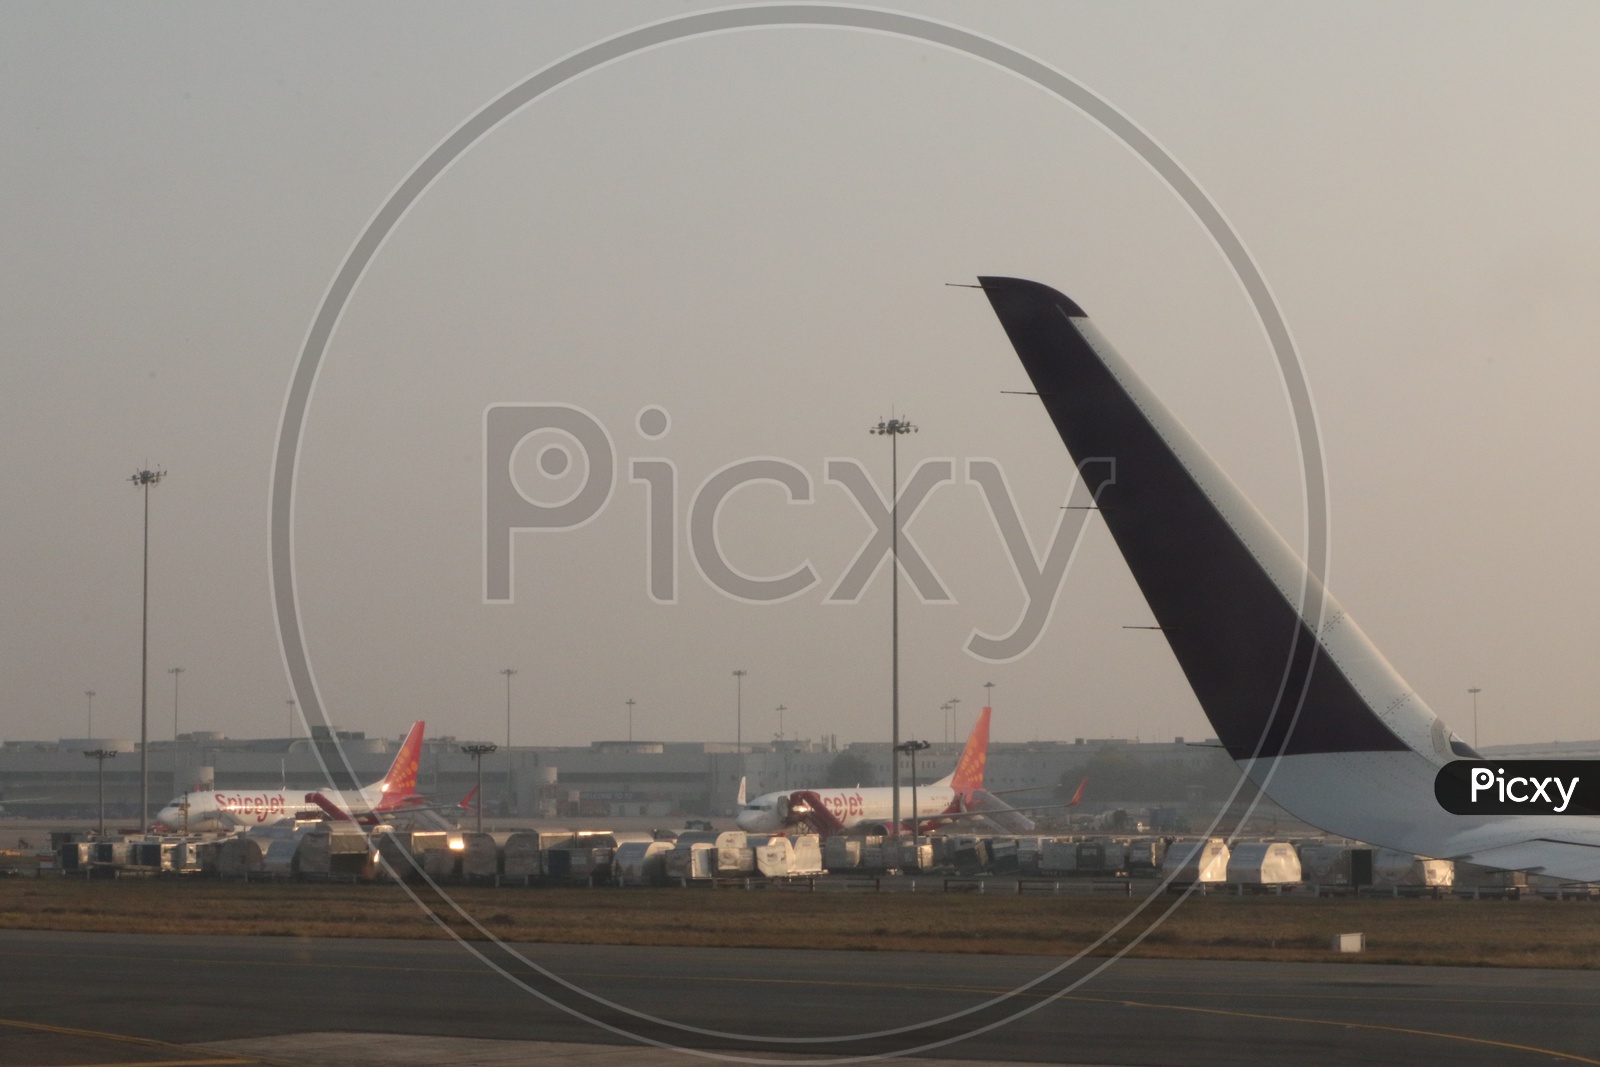 SpiceJet flights waiting on Runway